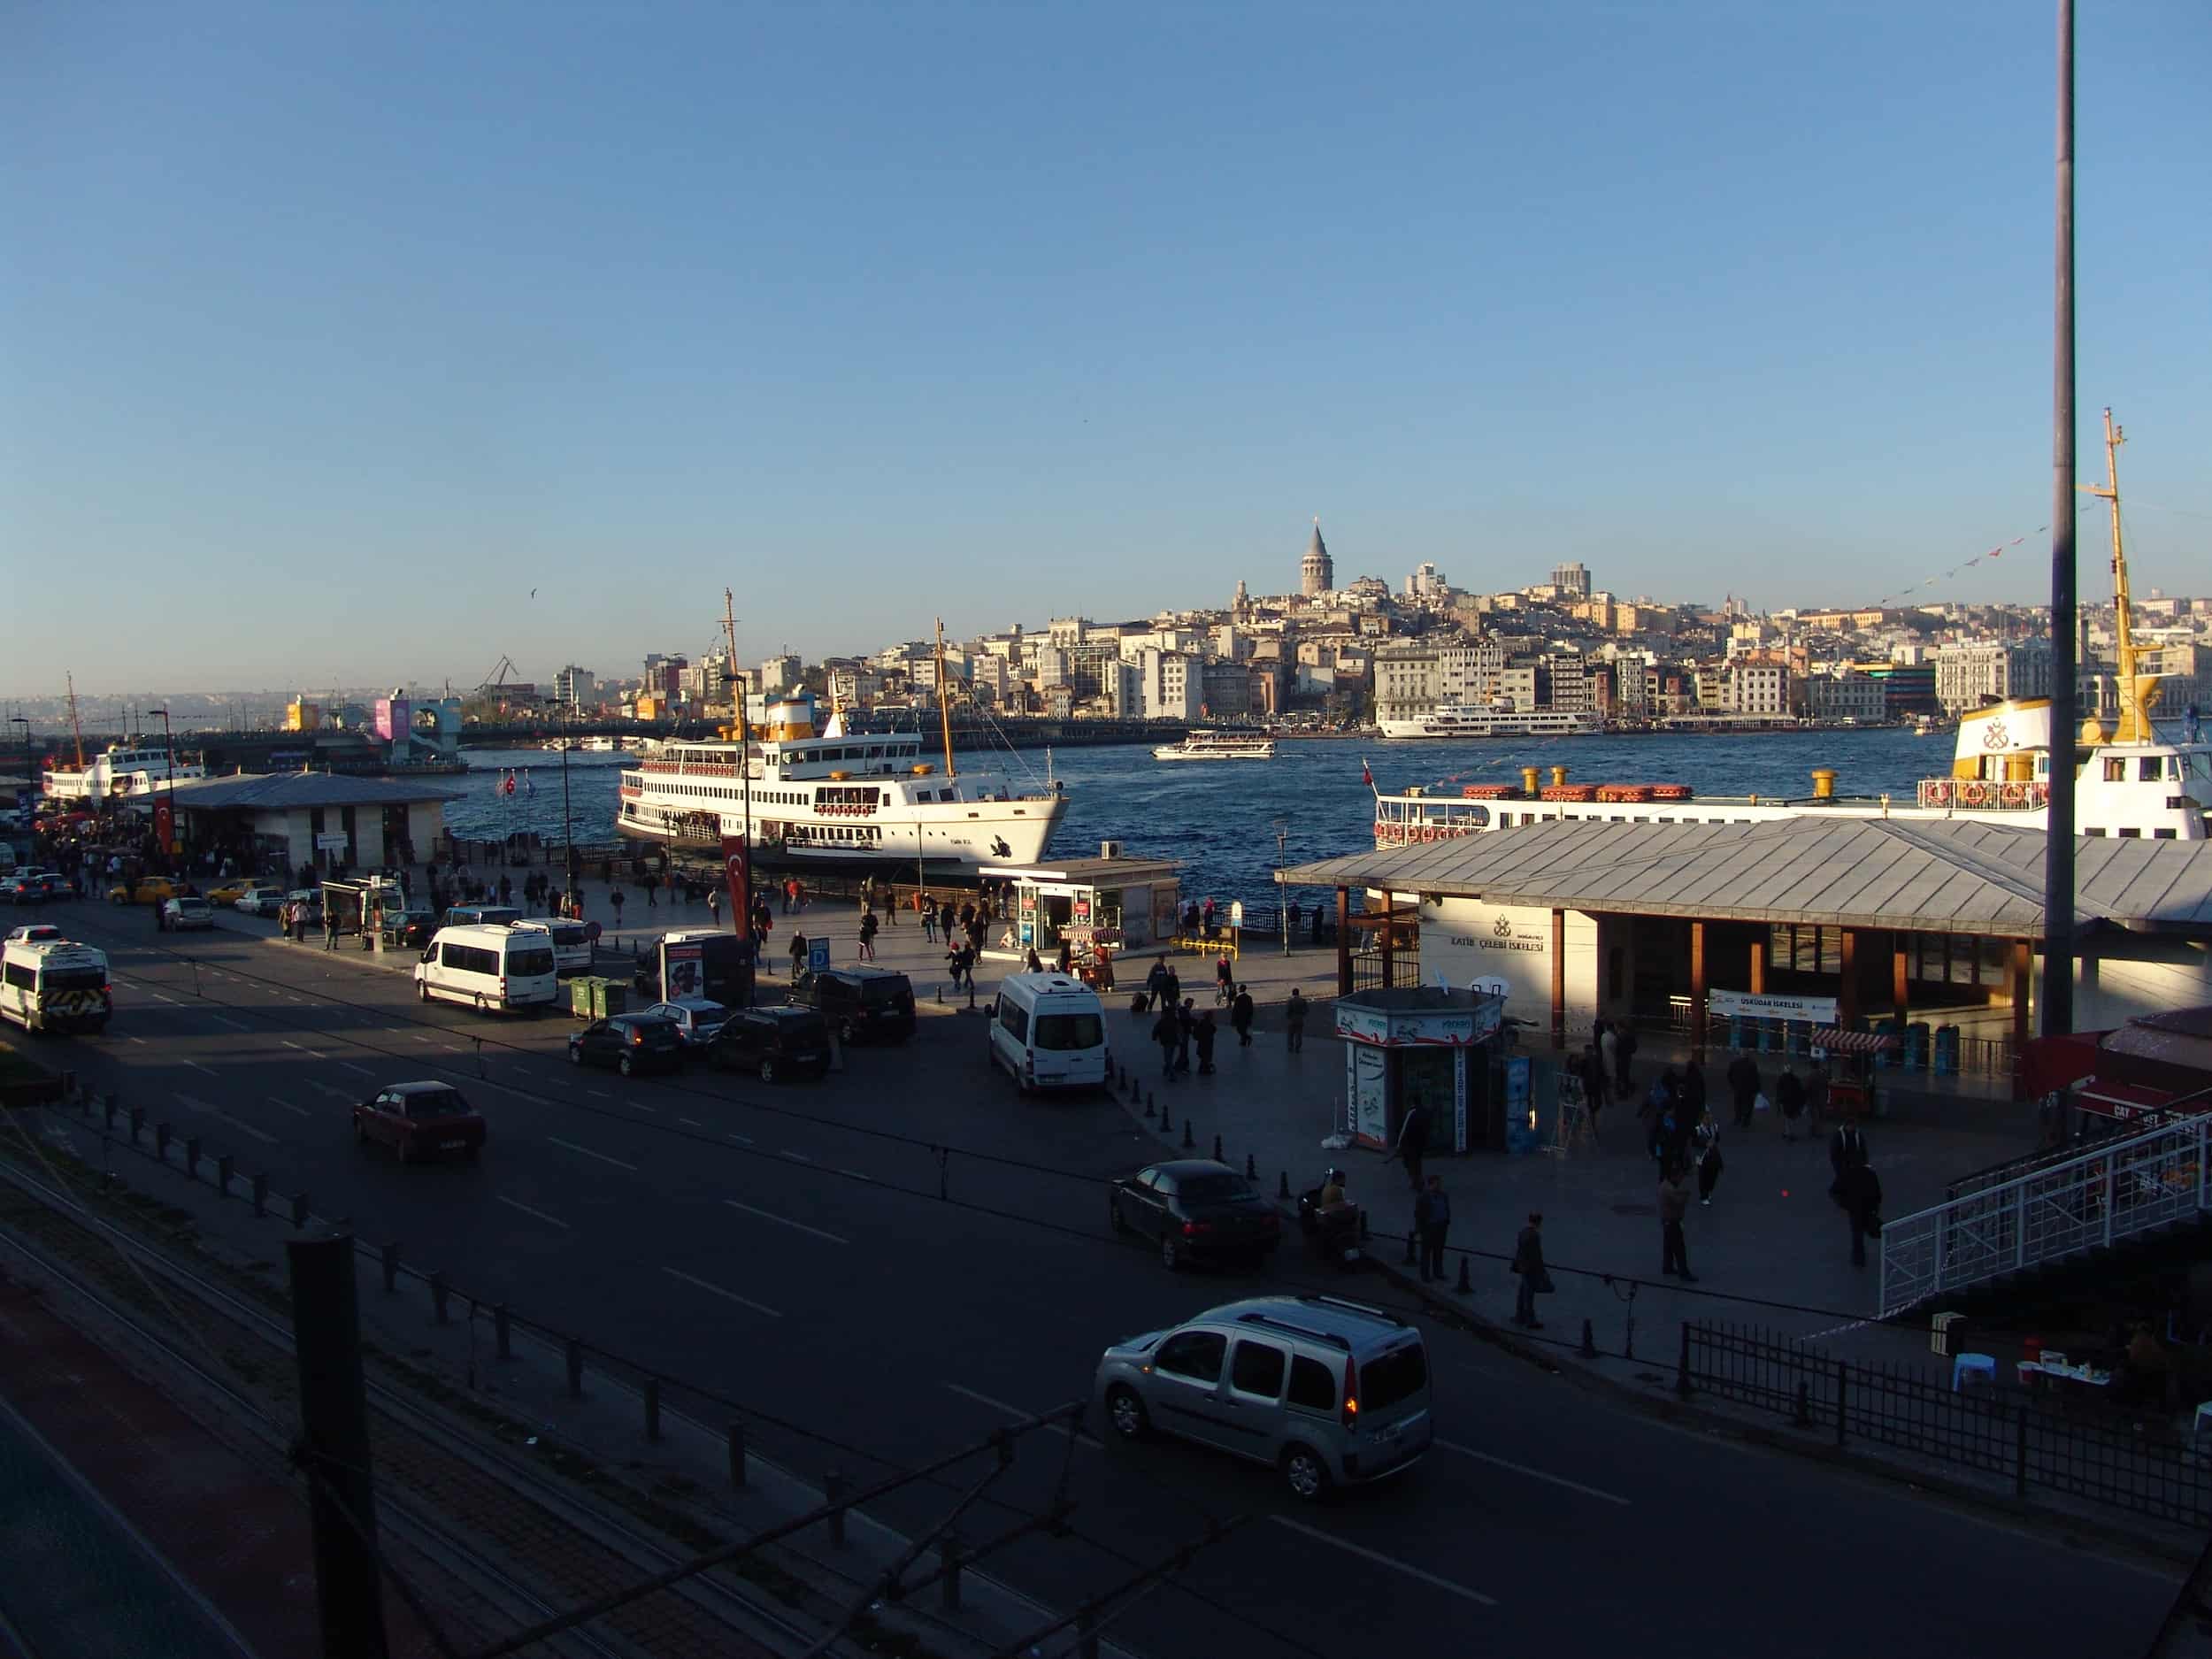 Eminönü Pier in Eminönü, Istanbul, Turkey